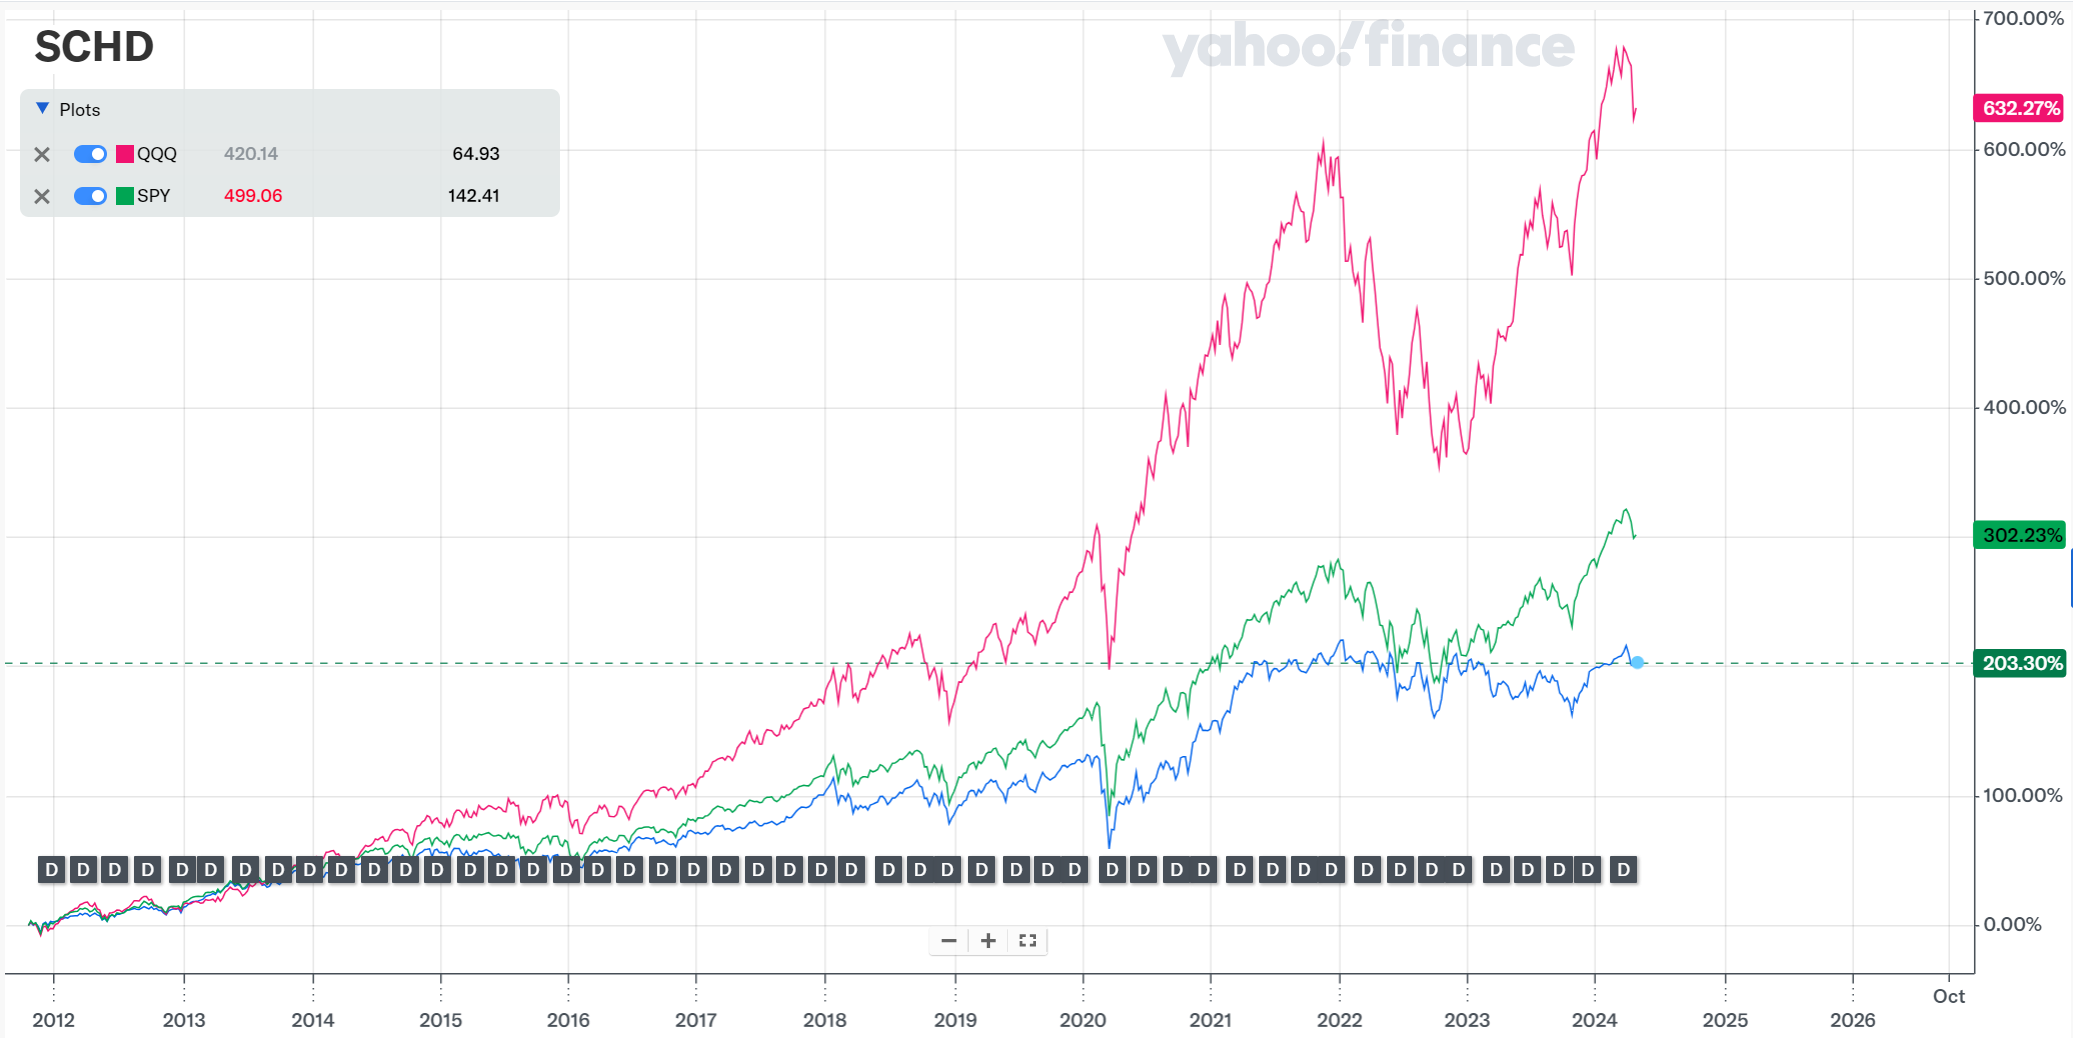 schd, spy, qqq 차트 비교 출처 : finance.yahoo.com